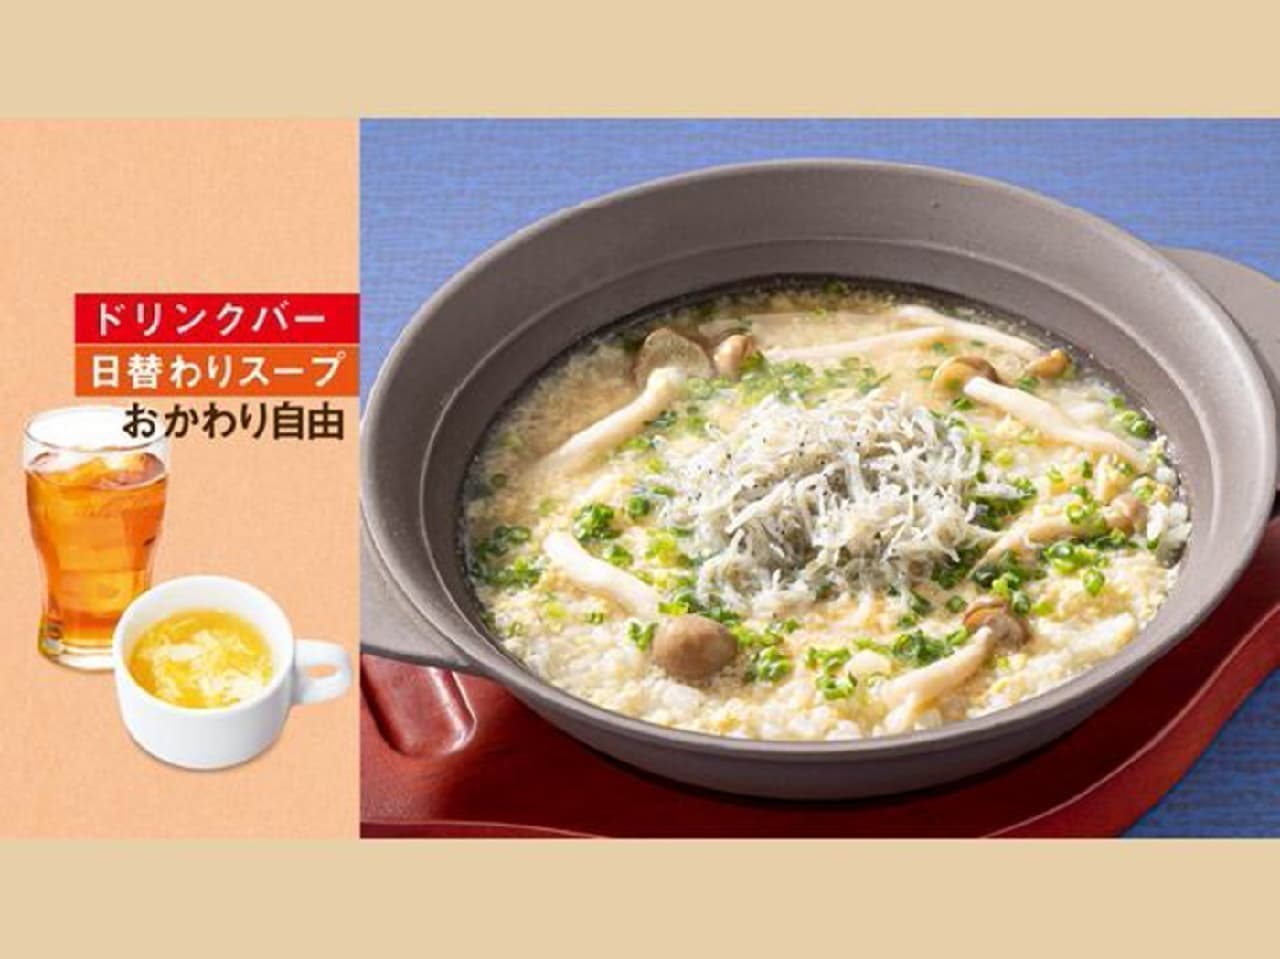 Gusto "Shirasu and Mushroom Porridge